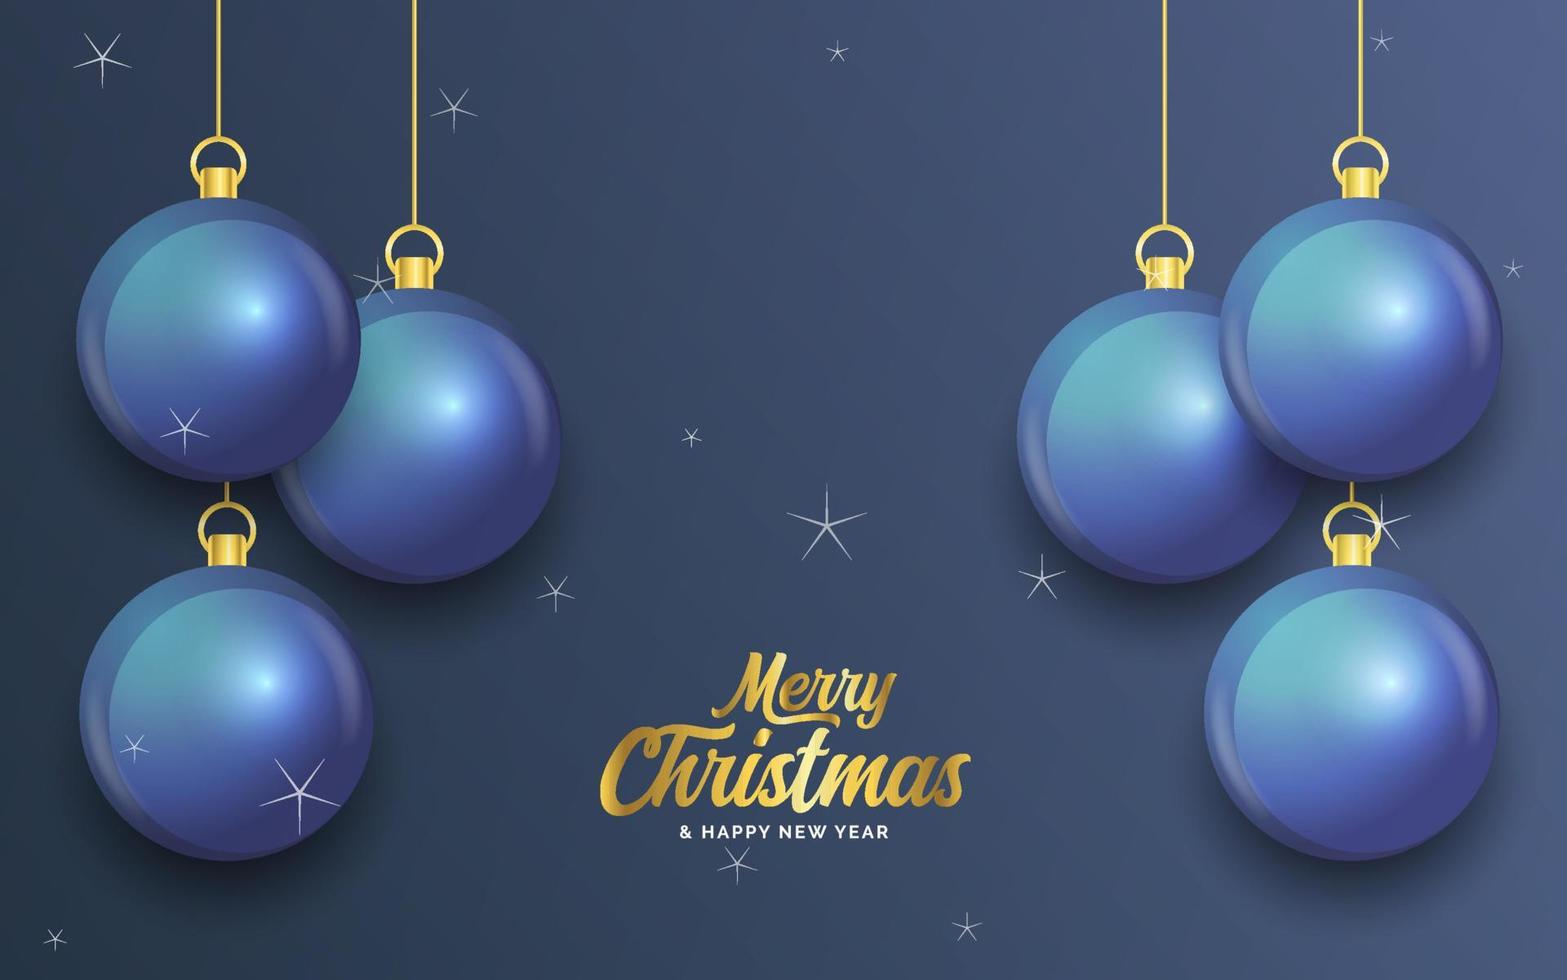 Merry Christmas dark blue banner with balls. Christmas card vector